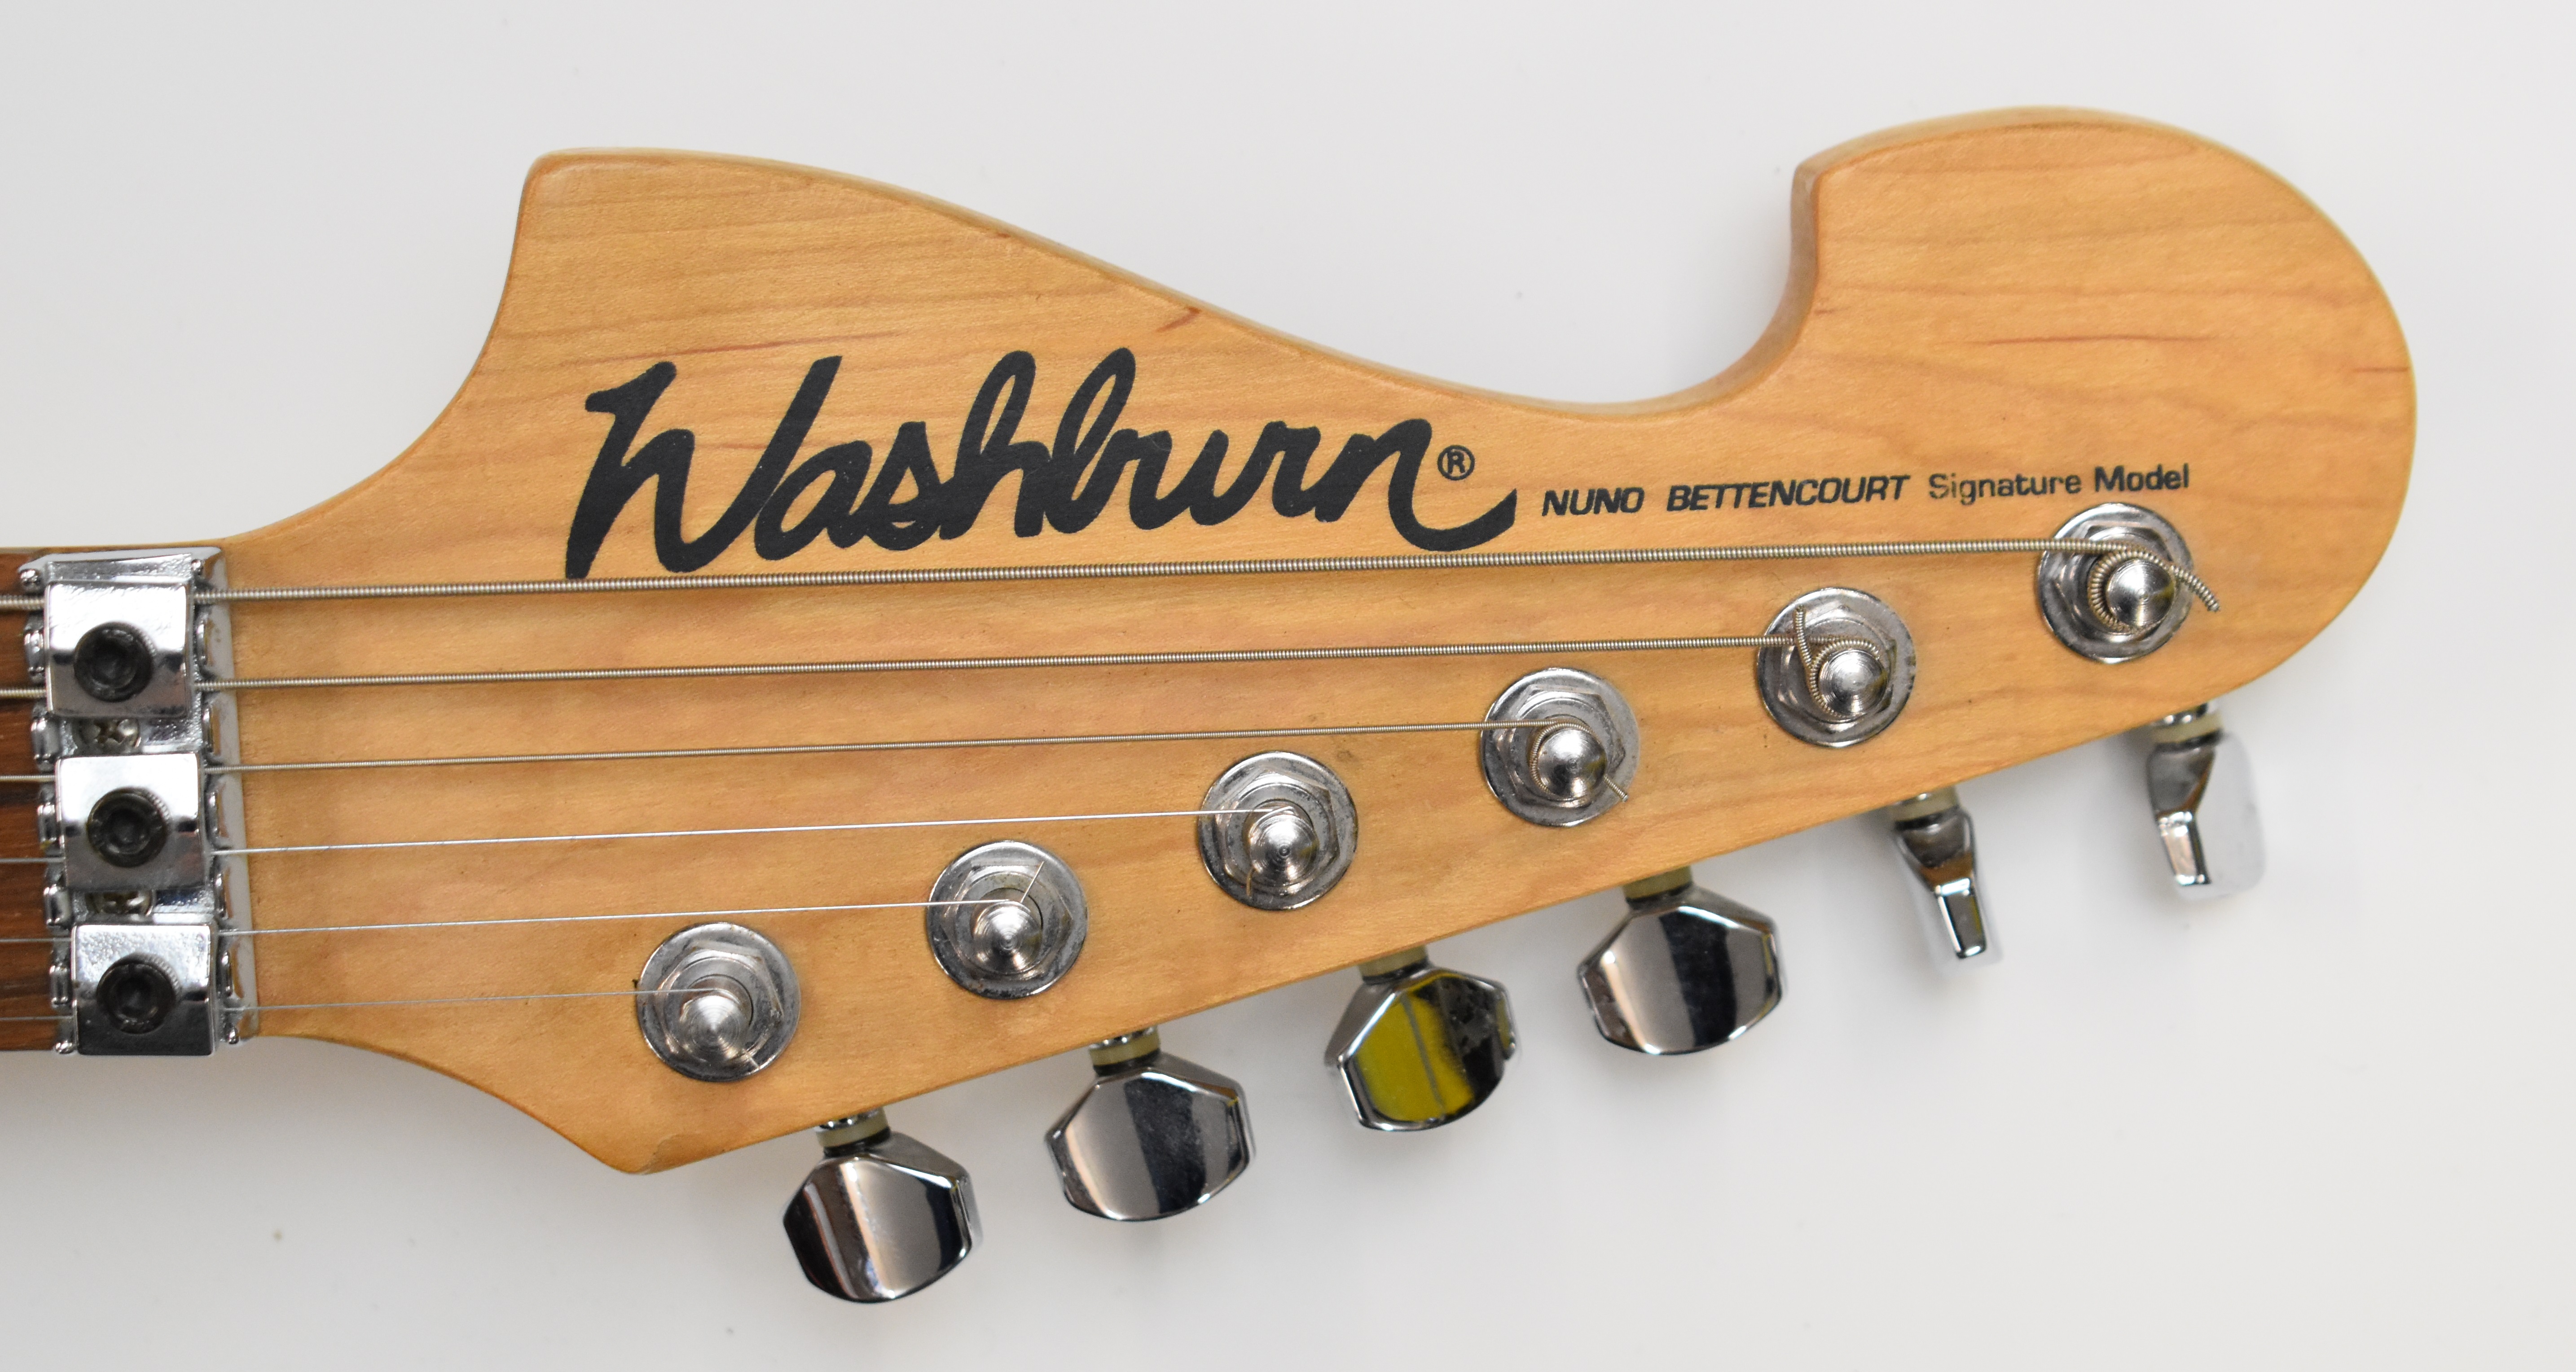 Washburn N2 Nuno Bettencourt Signature Model electric guitar with Floyd Rose tremolo, Bill - Image 3 of 8